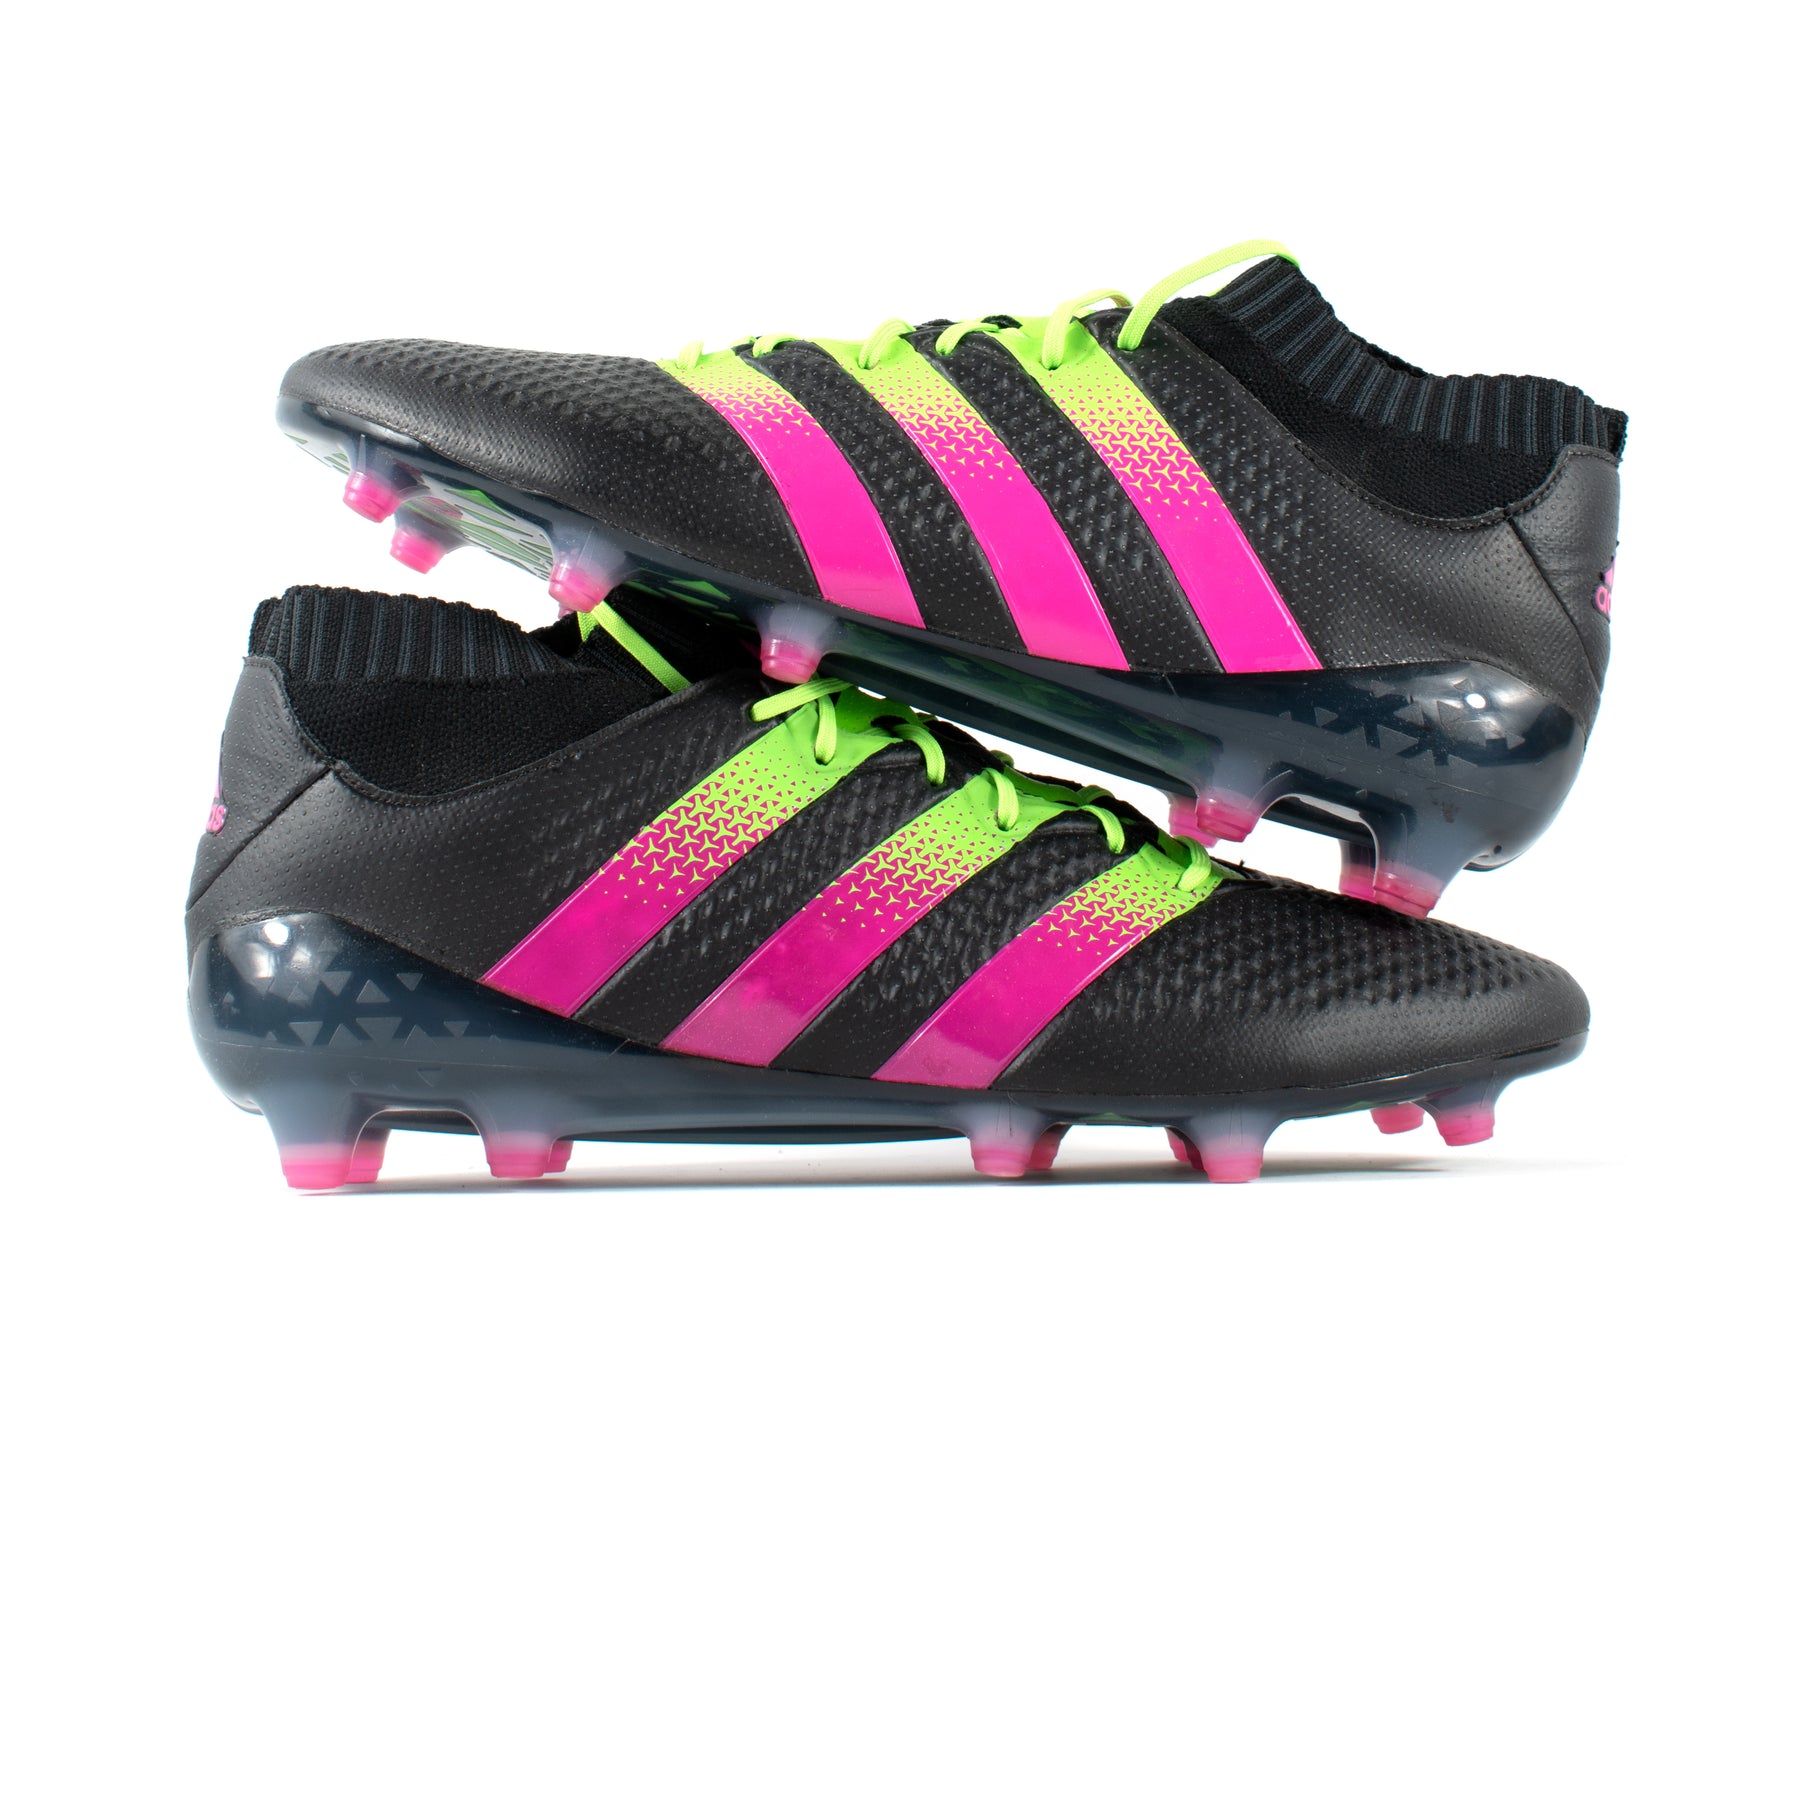 vorst Gunst draadloos Adidas Ace 16.1 Primeknit Black FG – Classic Soccer Cleats